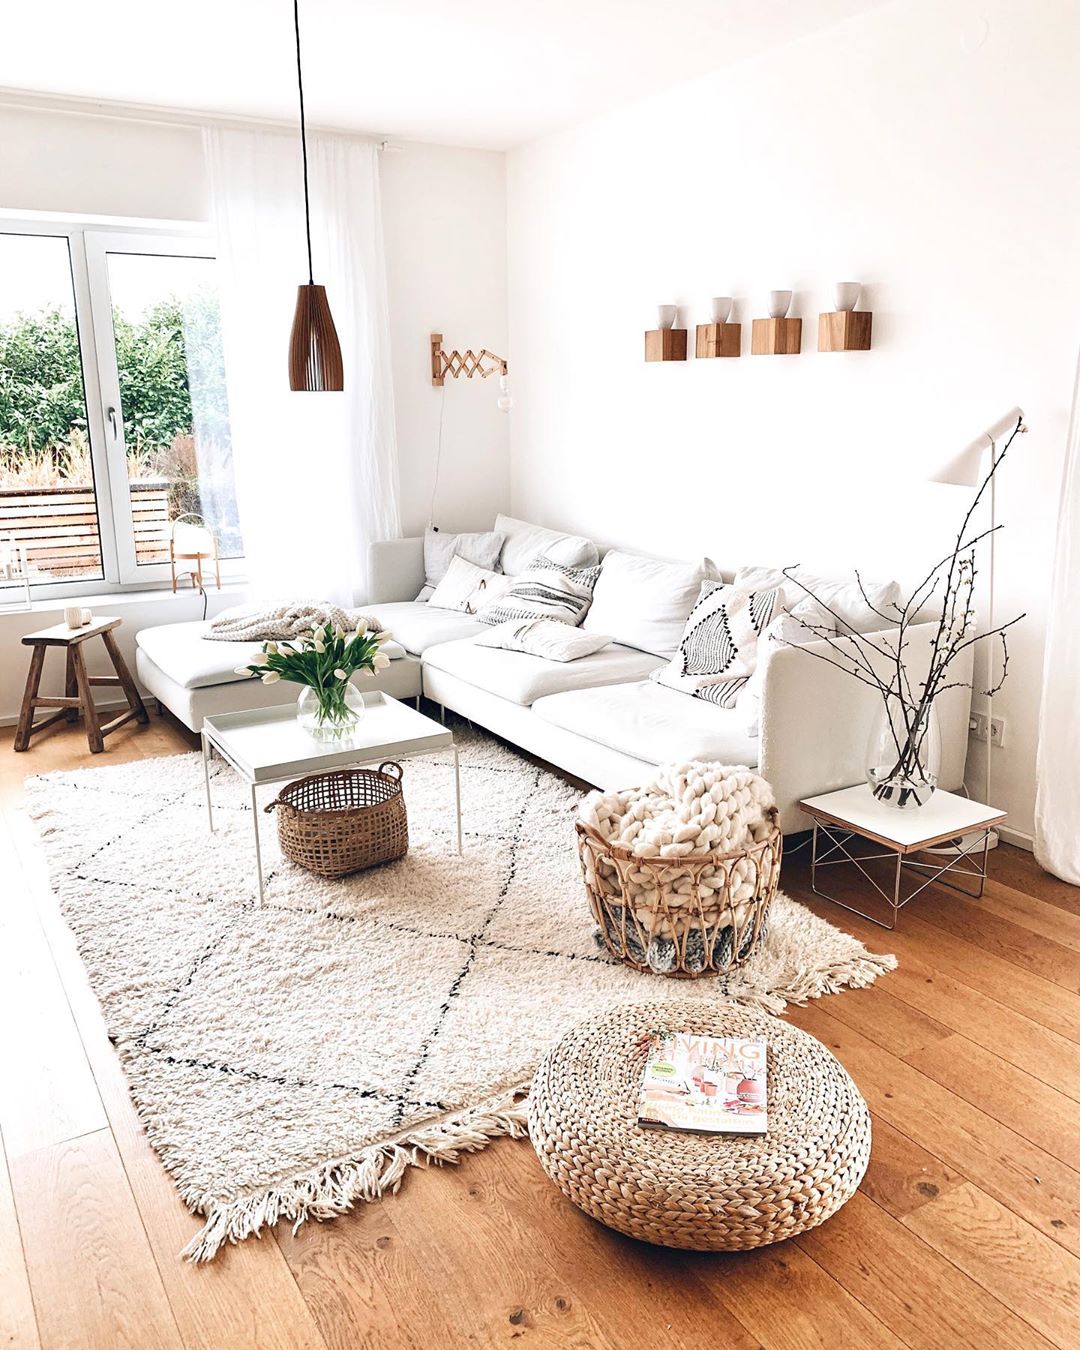 Cozy minimalist living room decor. Photo by Instagram user @living.hoch3